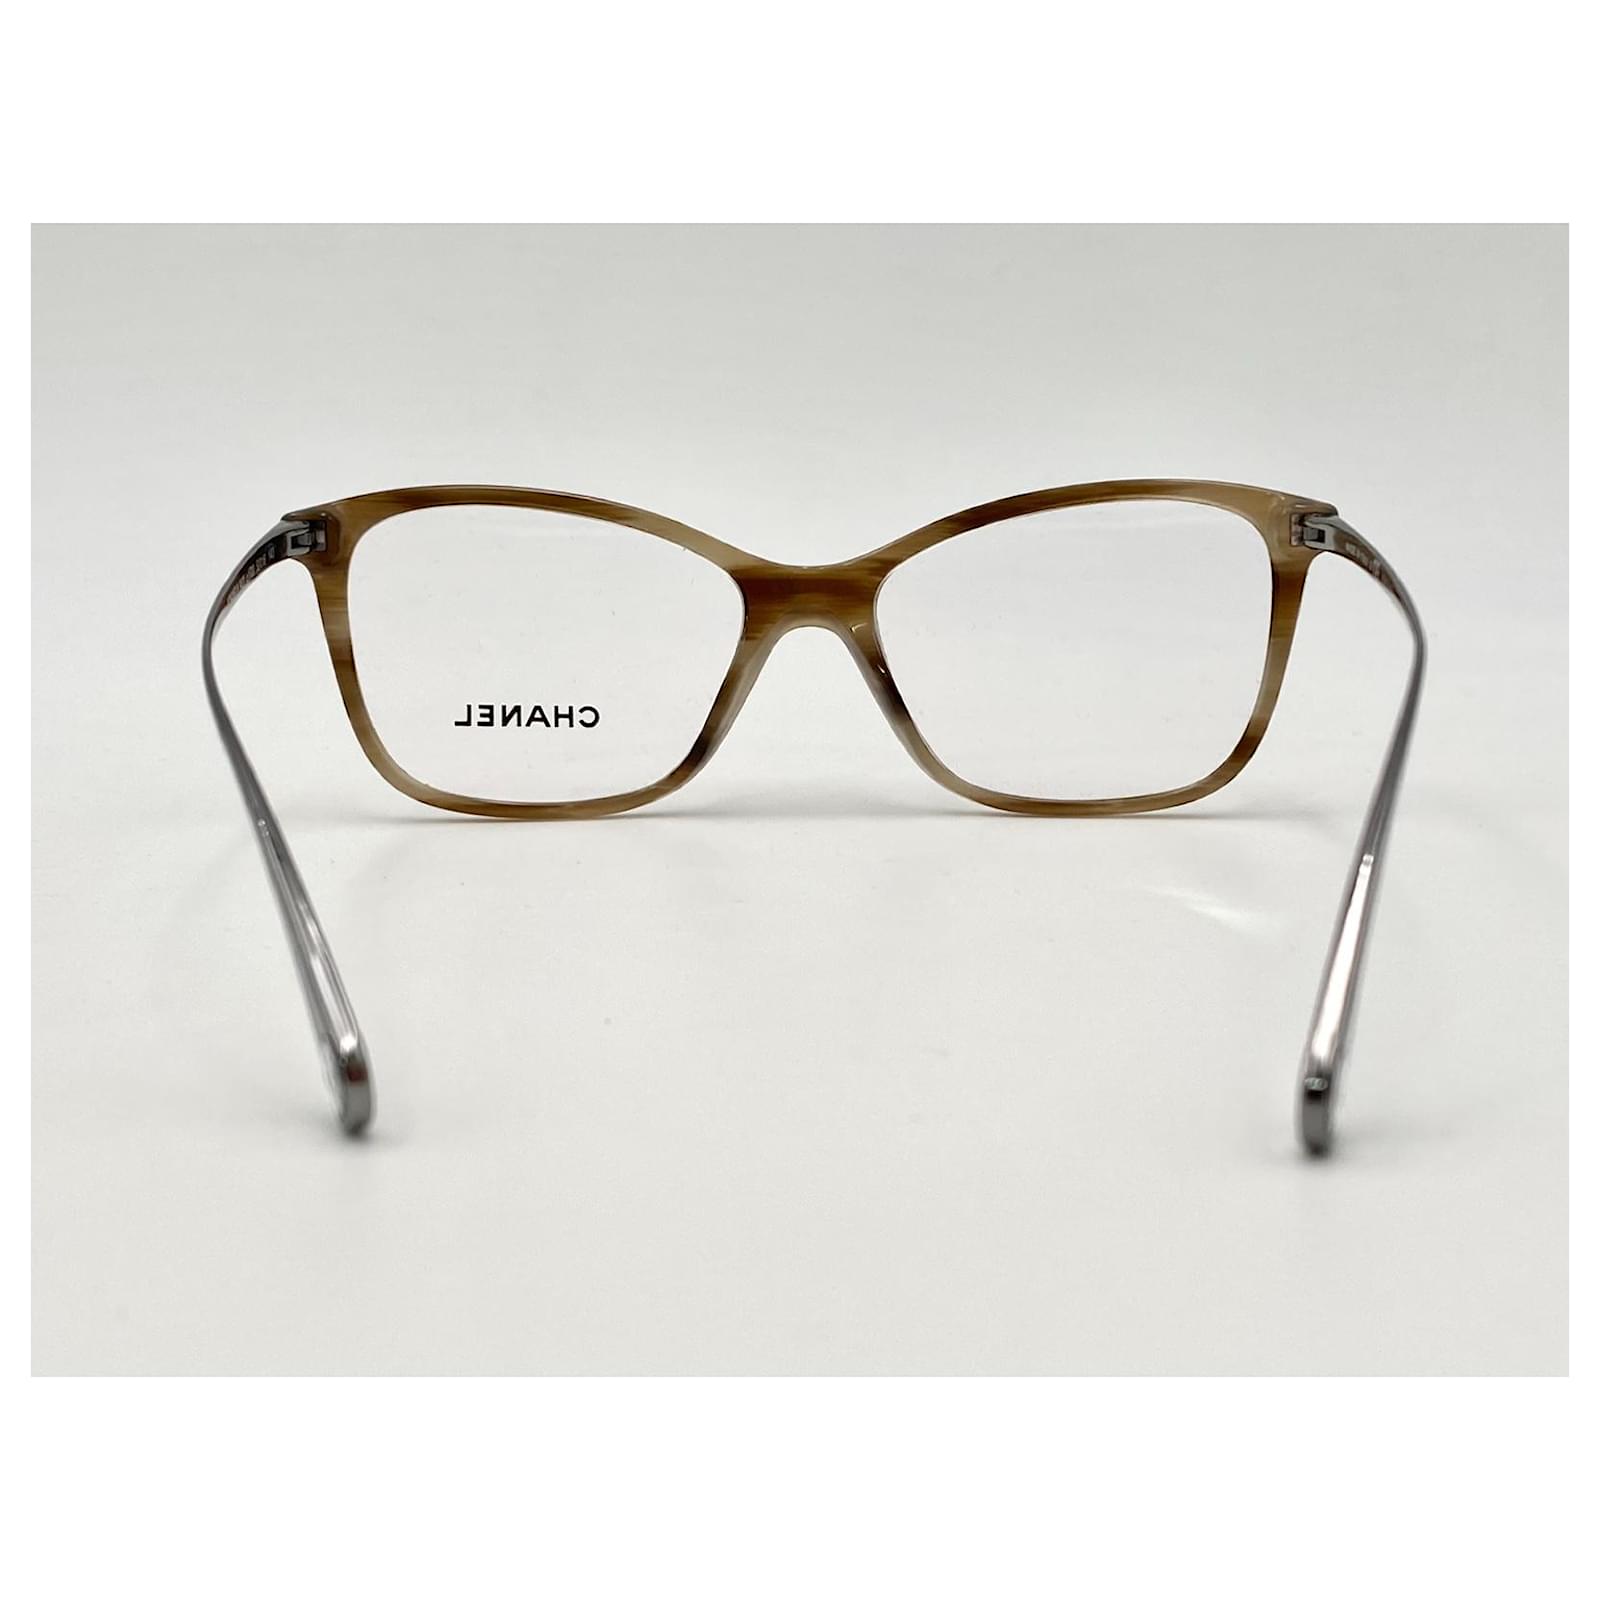 DAMIANI Eyeglasses st601 027 Havana with Strass